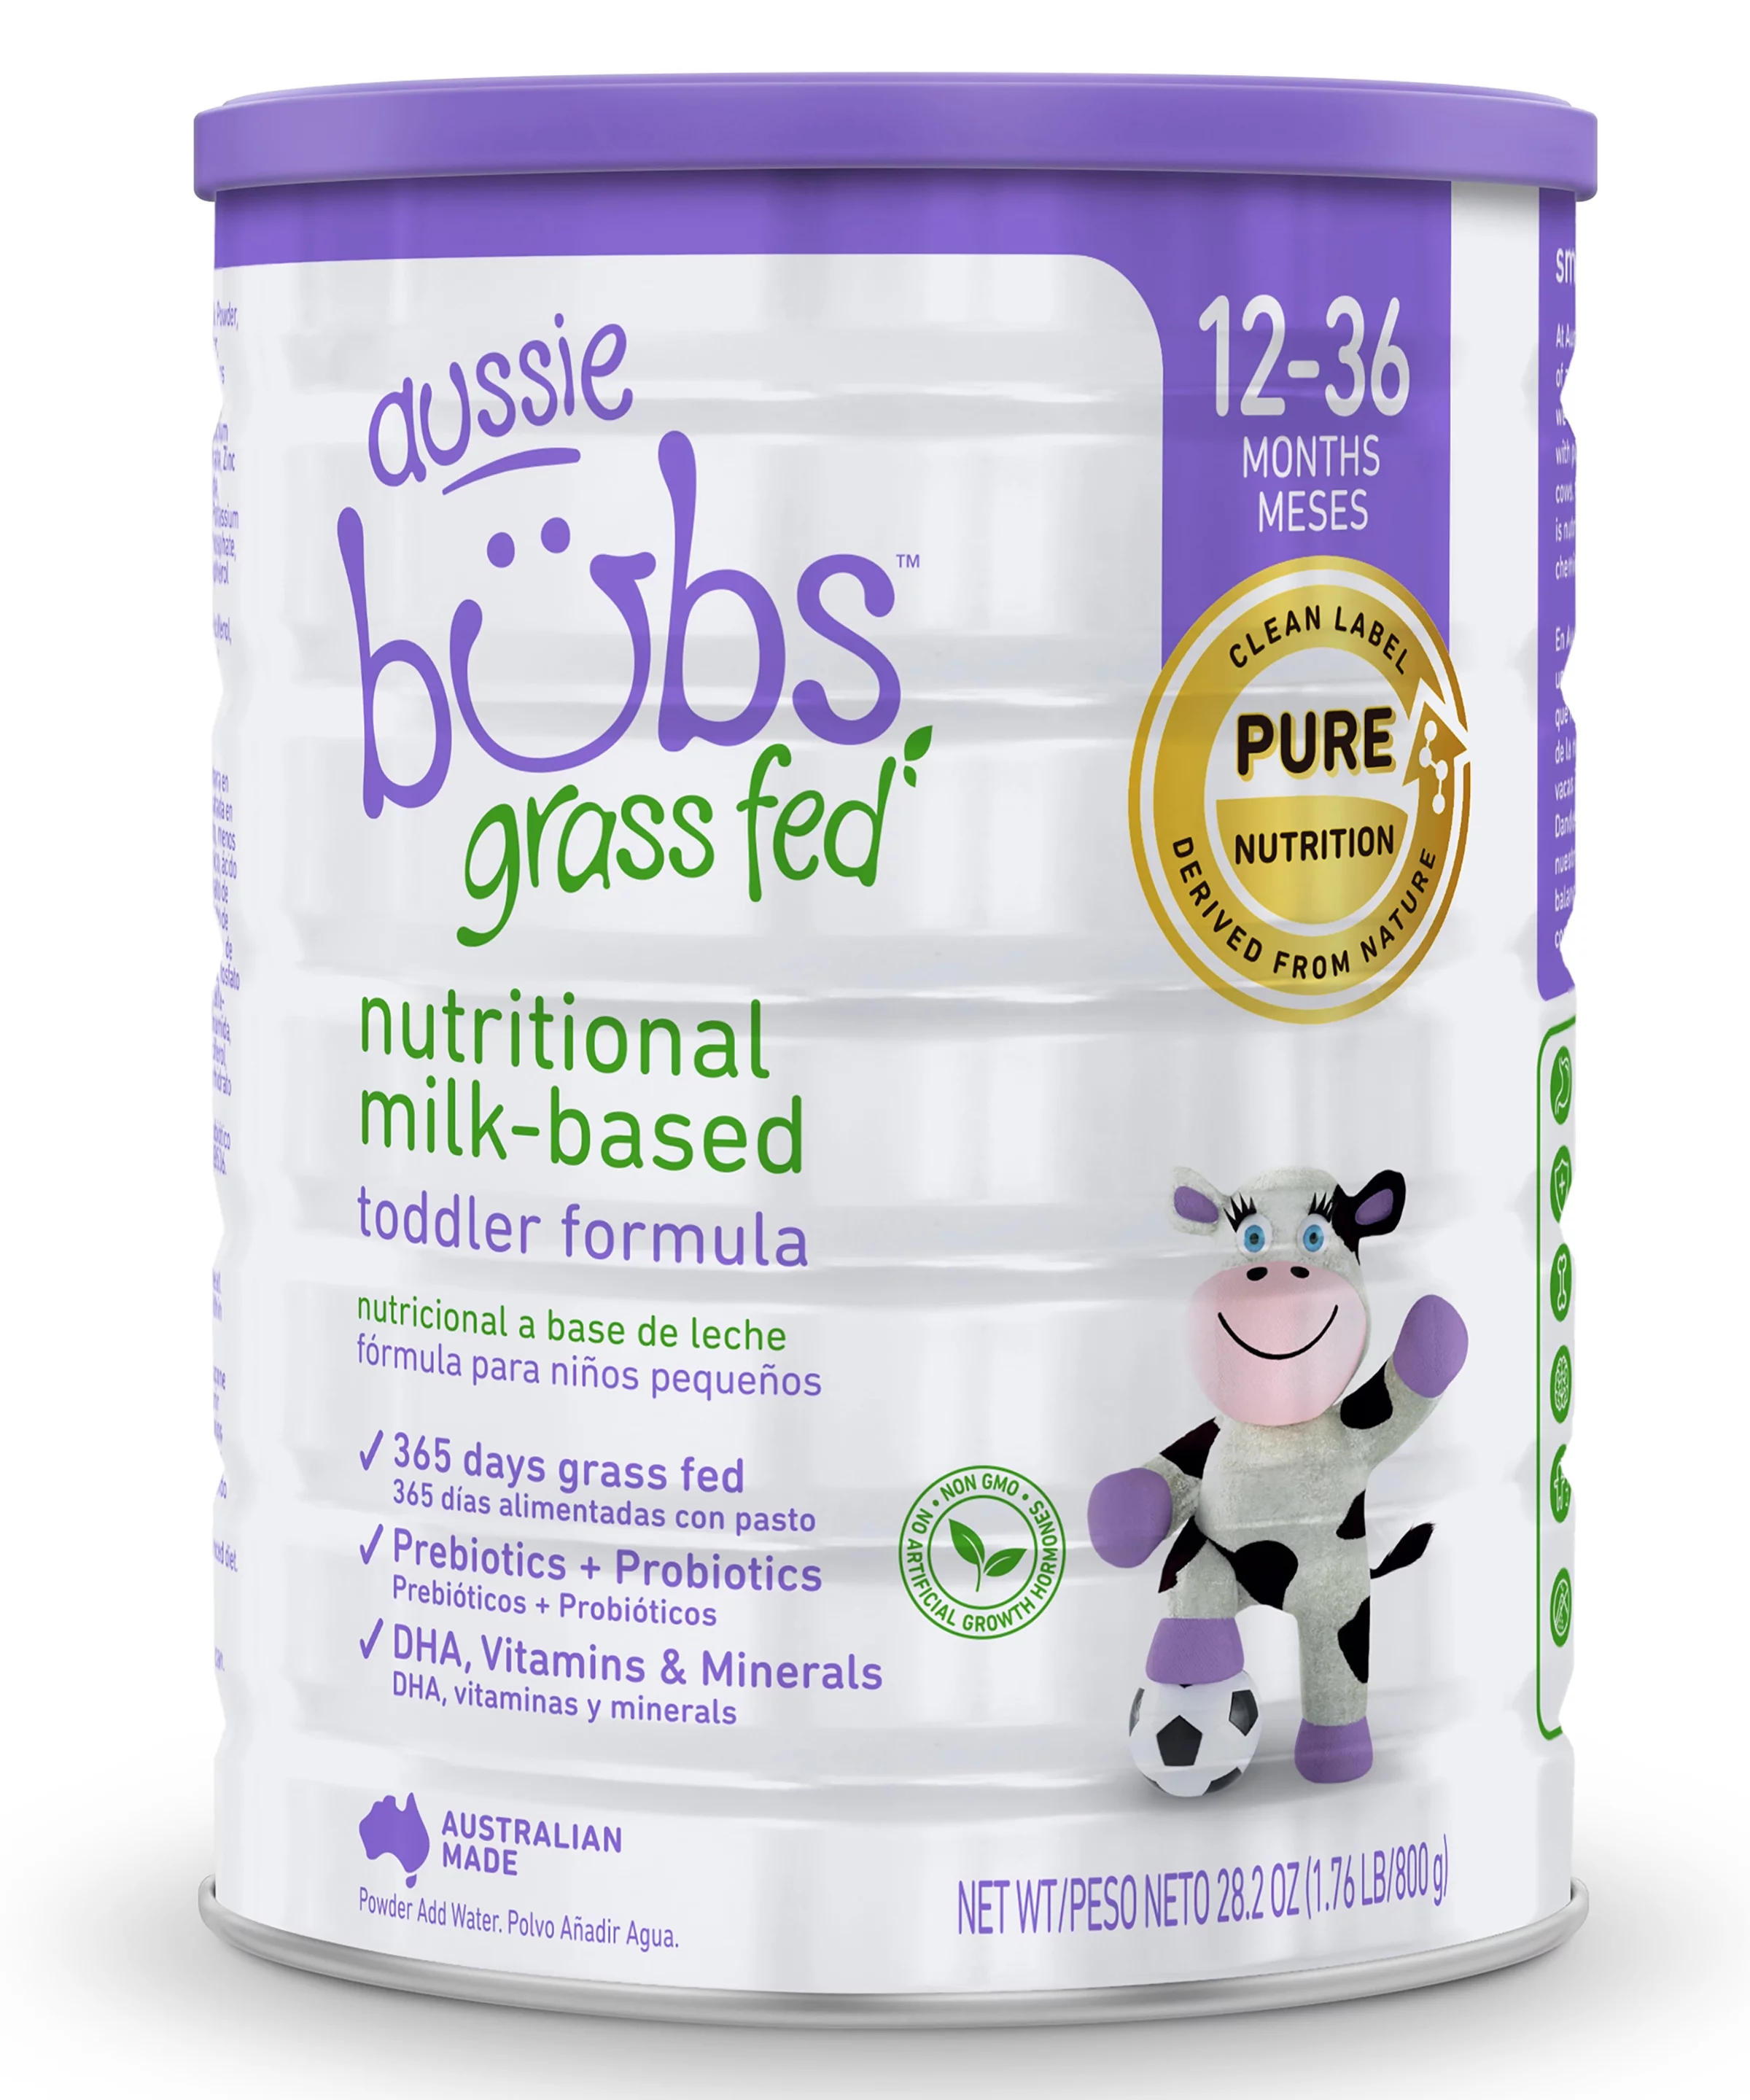 Aussie Bubs™ Grass Fed Nutritional Milk-based Toddler Formula, 800g, (12-36 Months)